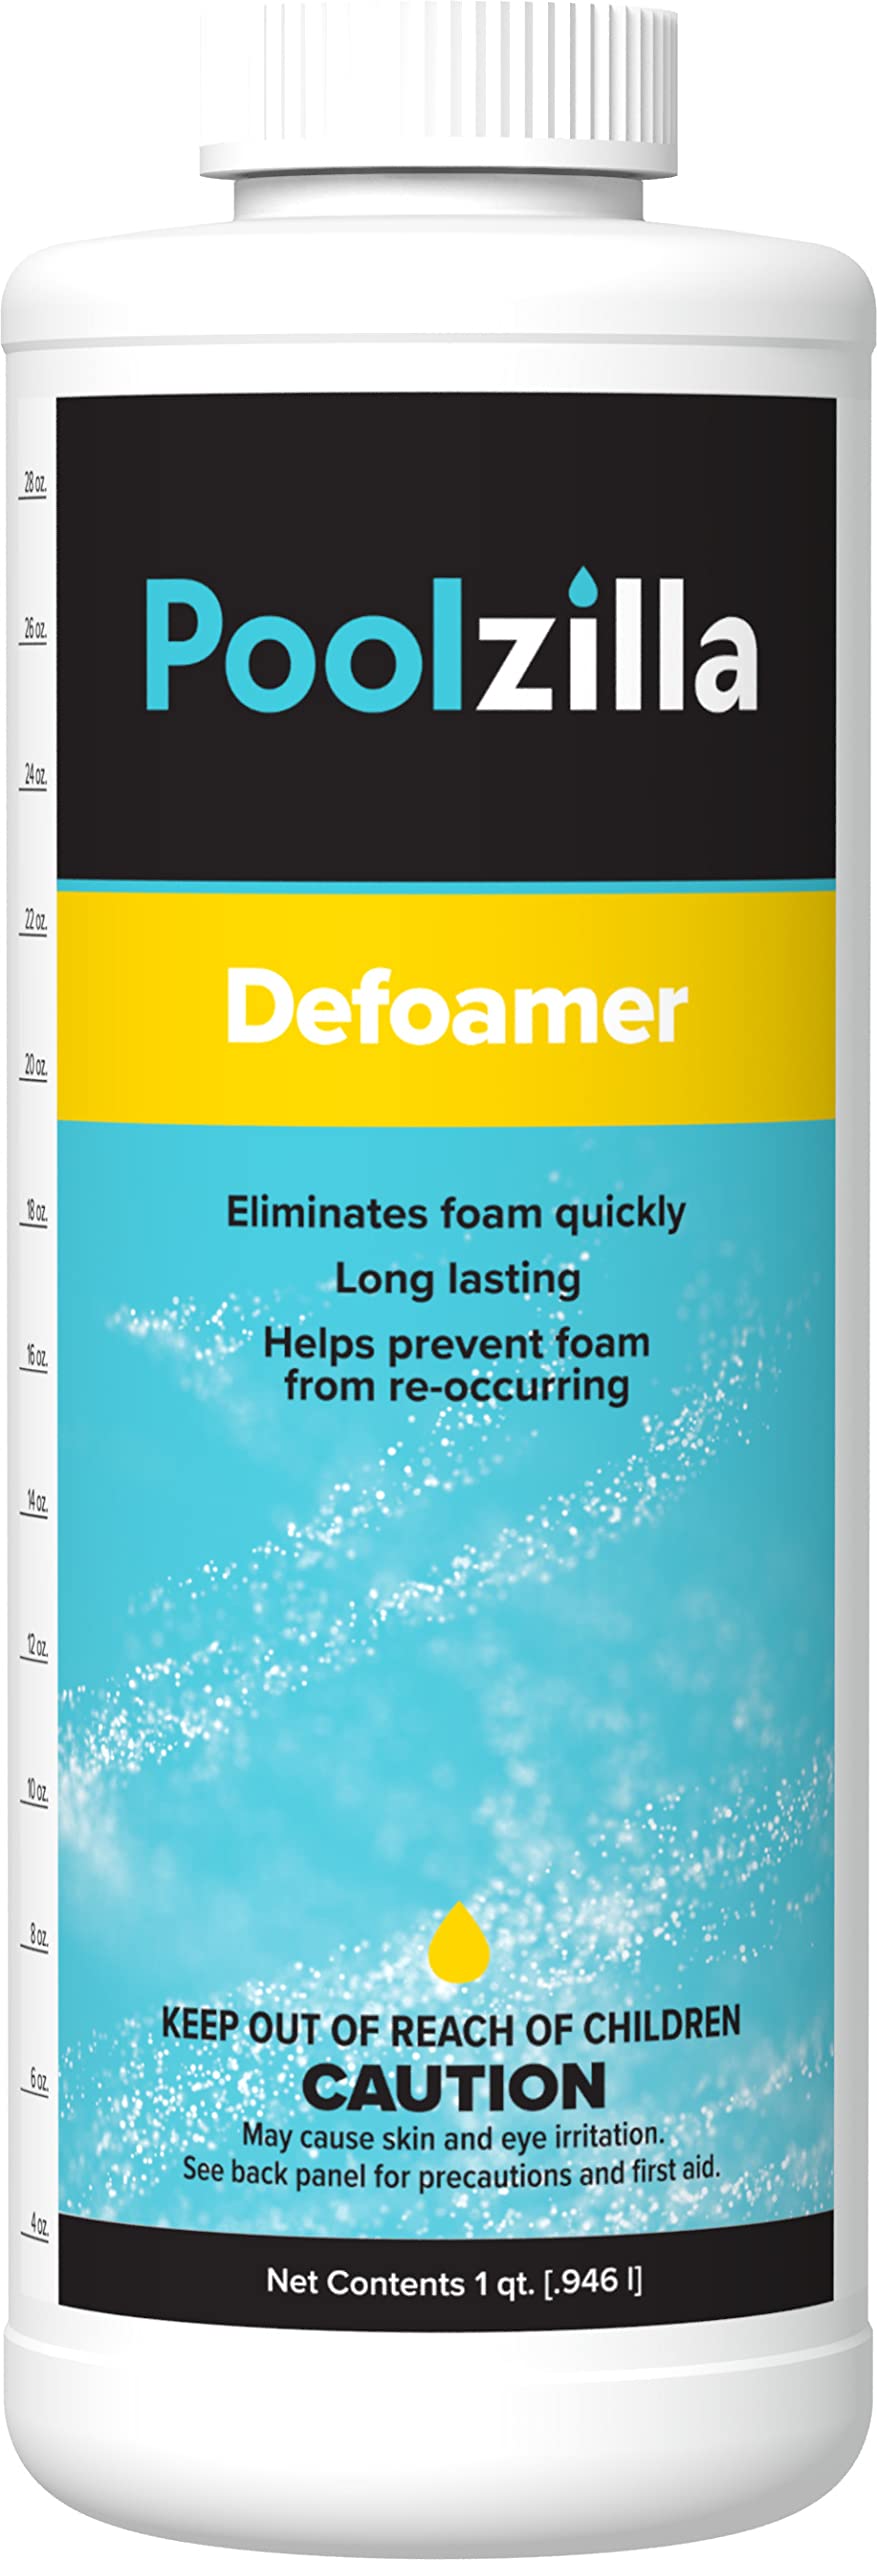 Poolzilla Pool Defoamer (1 QT) Eliminate Foam and Restore Water Clarity